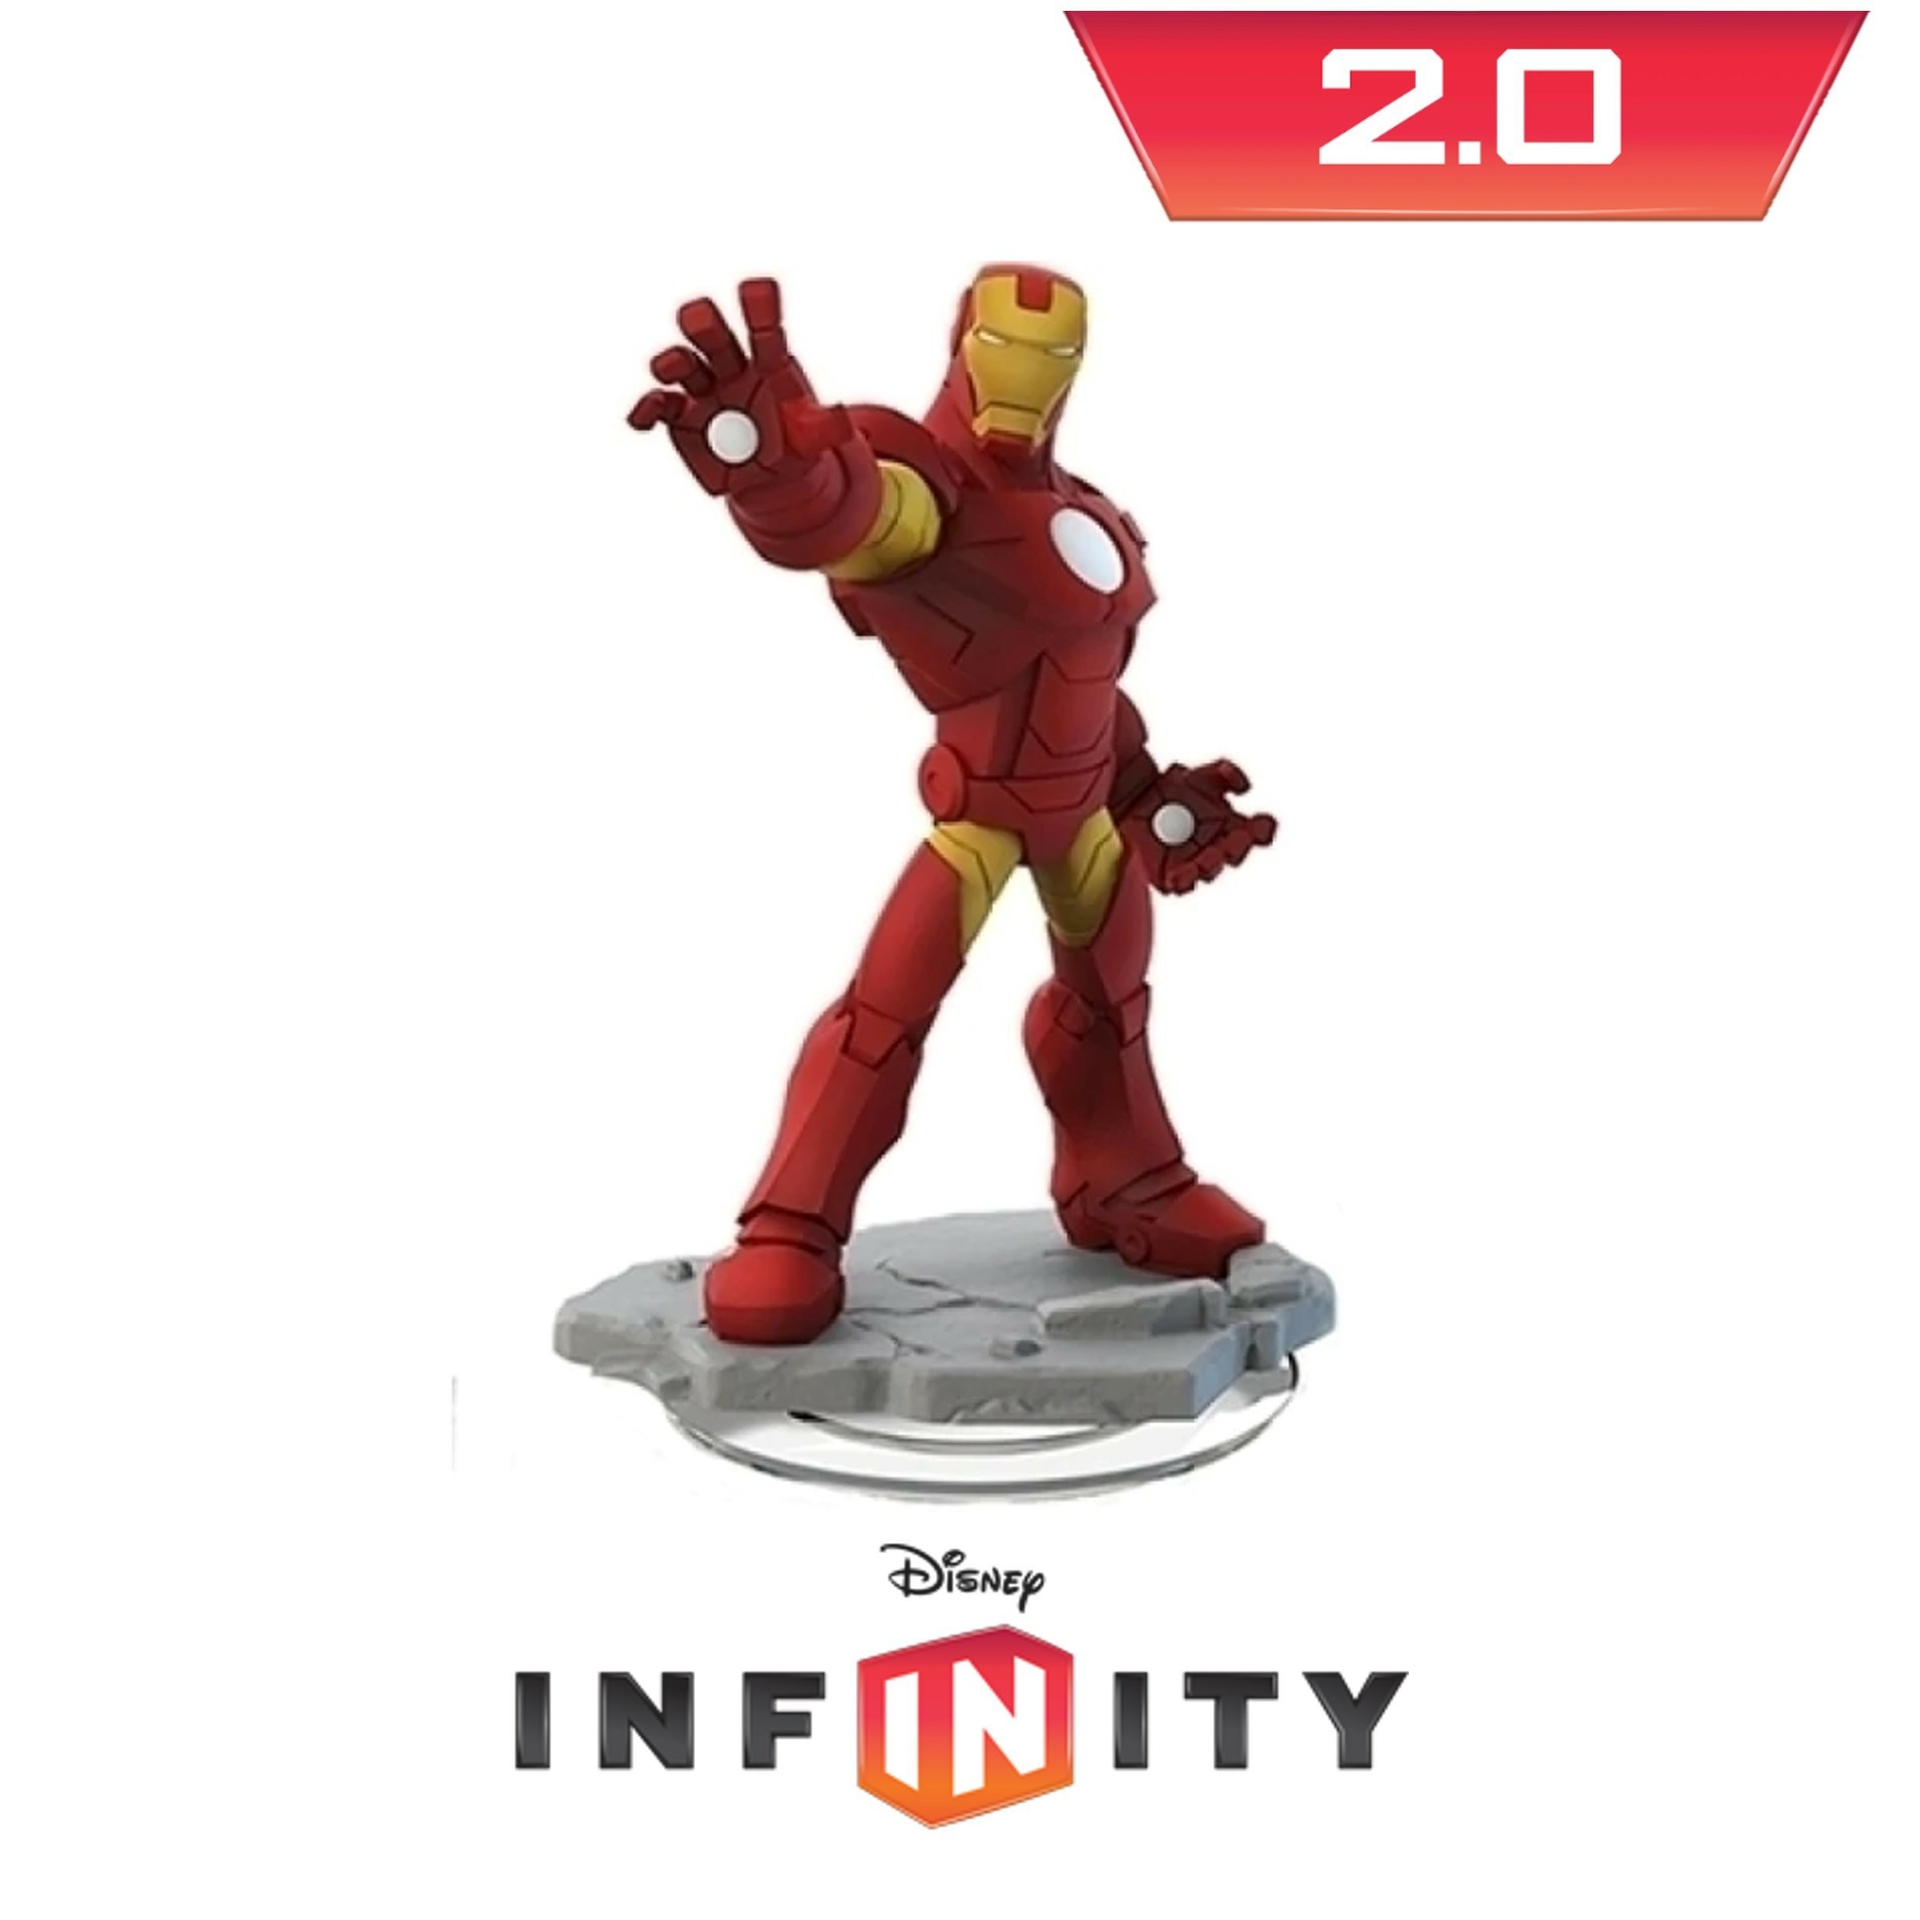 Disney Infinity - Iron man - Xbox 360 Hardware